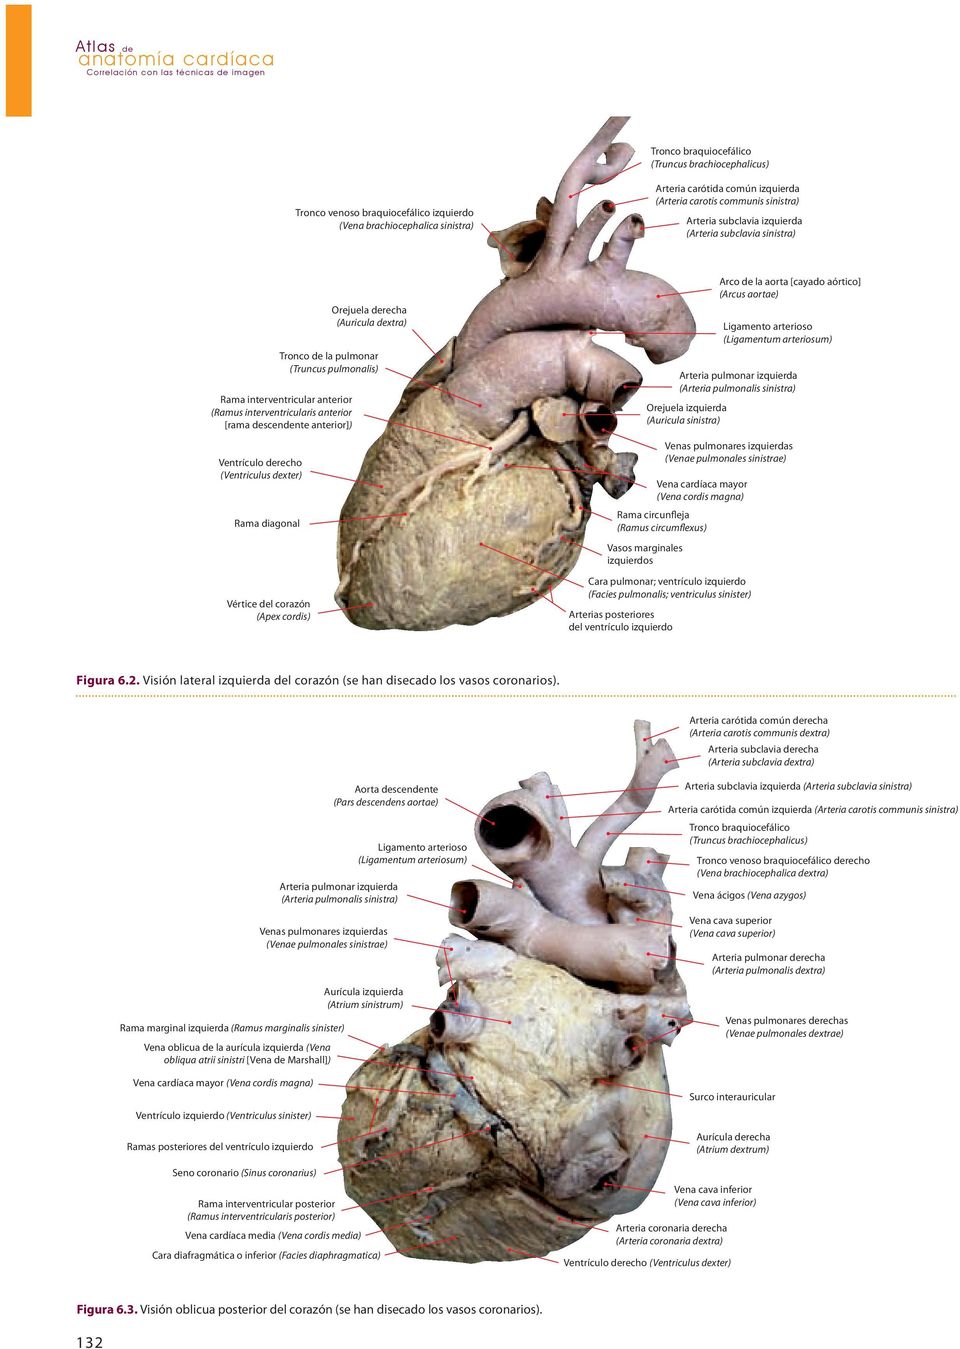 Rama interventricular anterior (Ramus interventricularis anterior [rama descendente anterior]) Ventrículo derecho (Ventriculus dexter) Rama diagonal Vértice del corazón (Apex cordis) Arterias